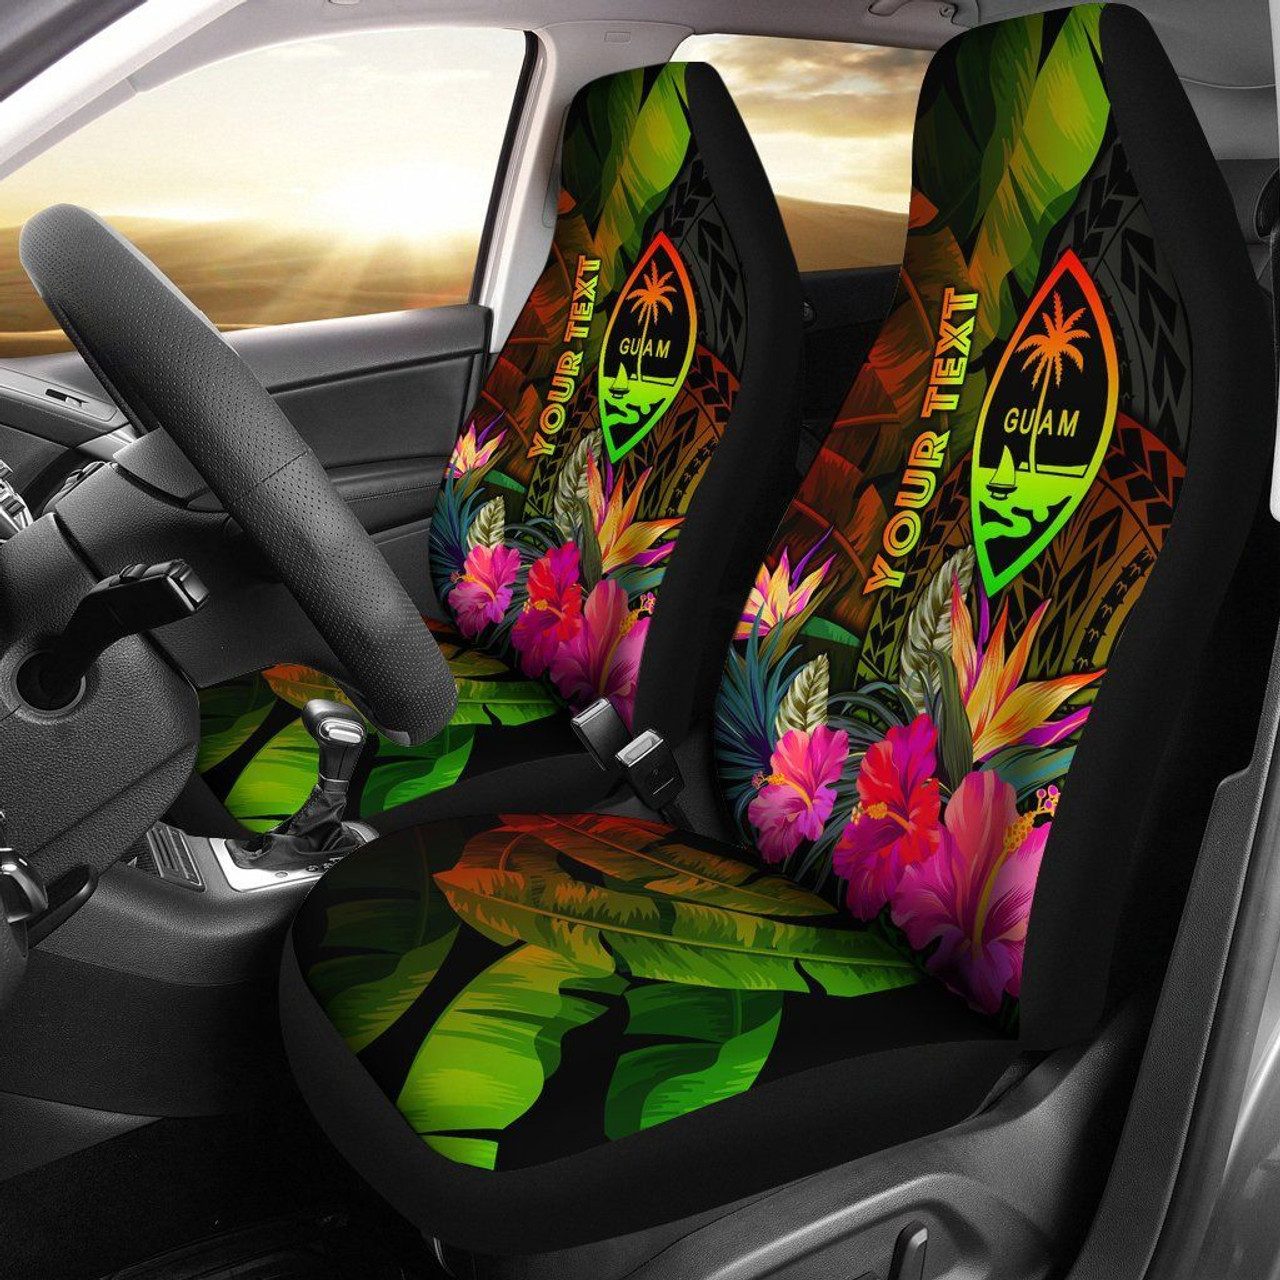 Guam Polynesian Personalised Car Seat Covers -  Hibiscus and Banana Leaves